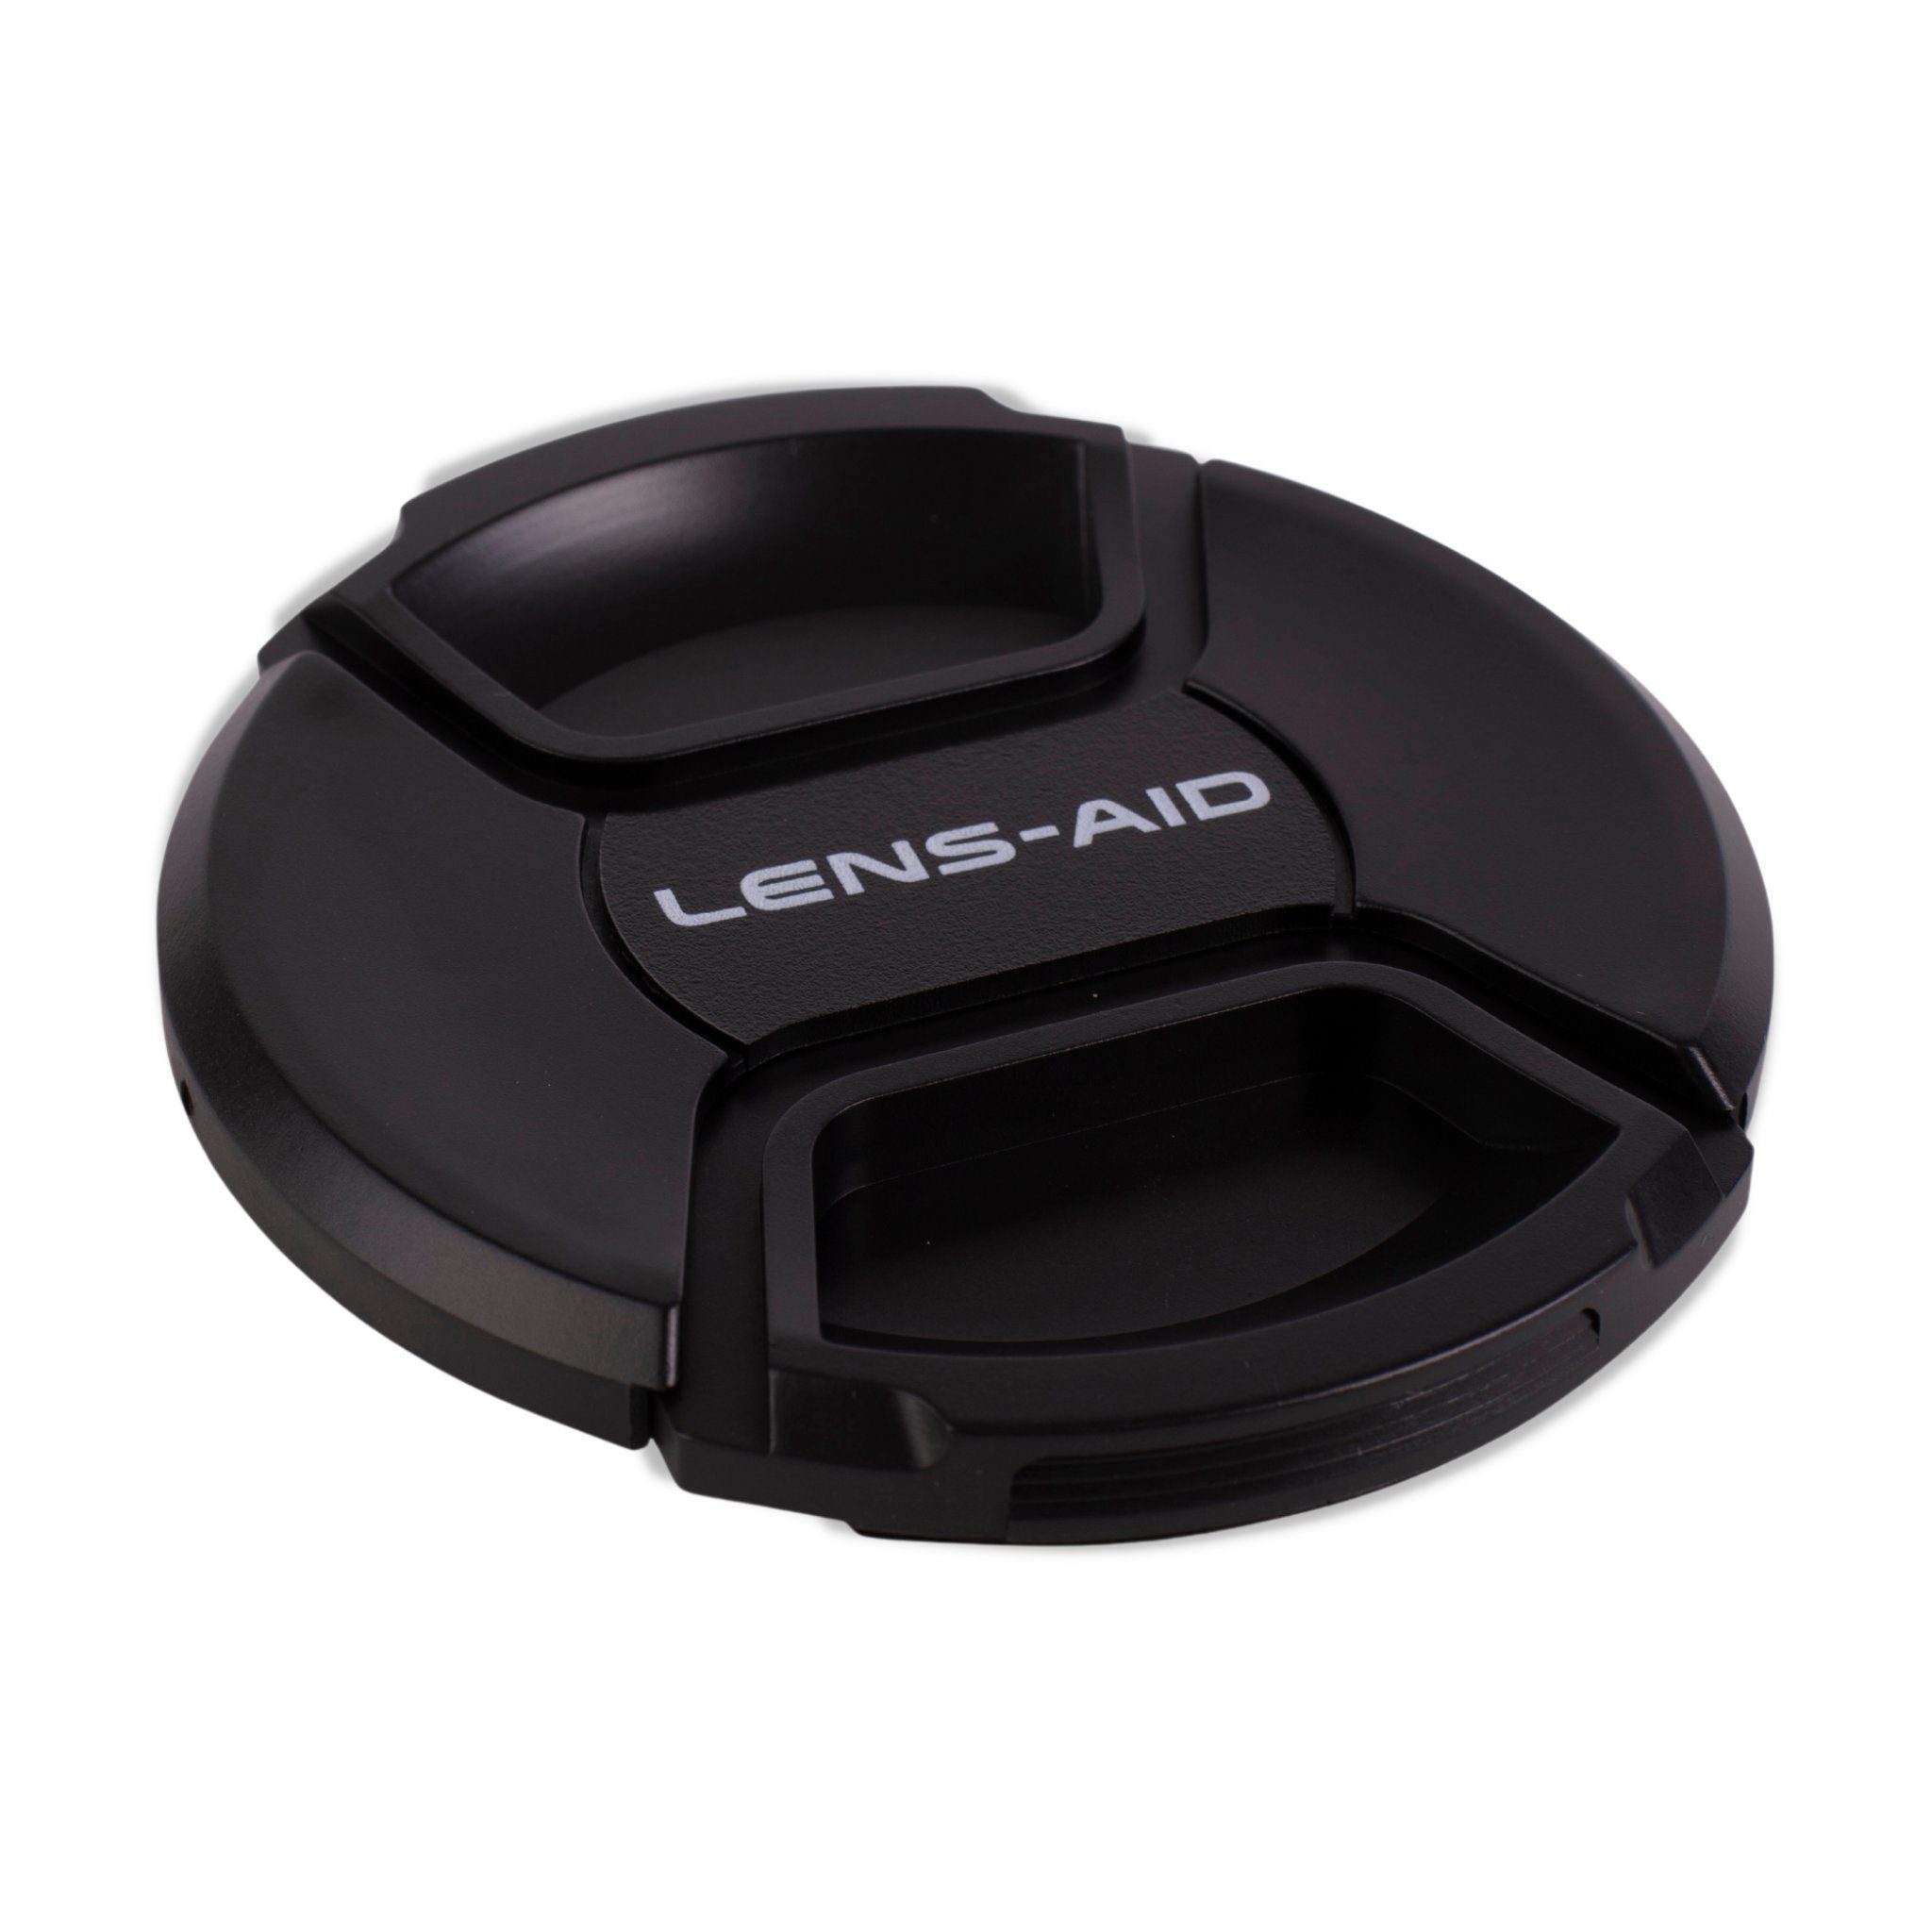 Lens-Aid innenliegender (37mm-105mm), Schnappmechanismus Objektivdeckel Ersatz-Objektivdeckel